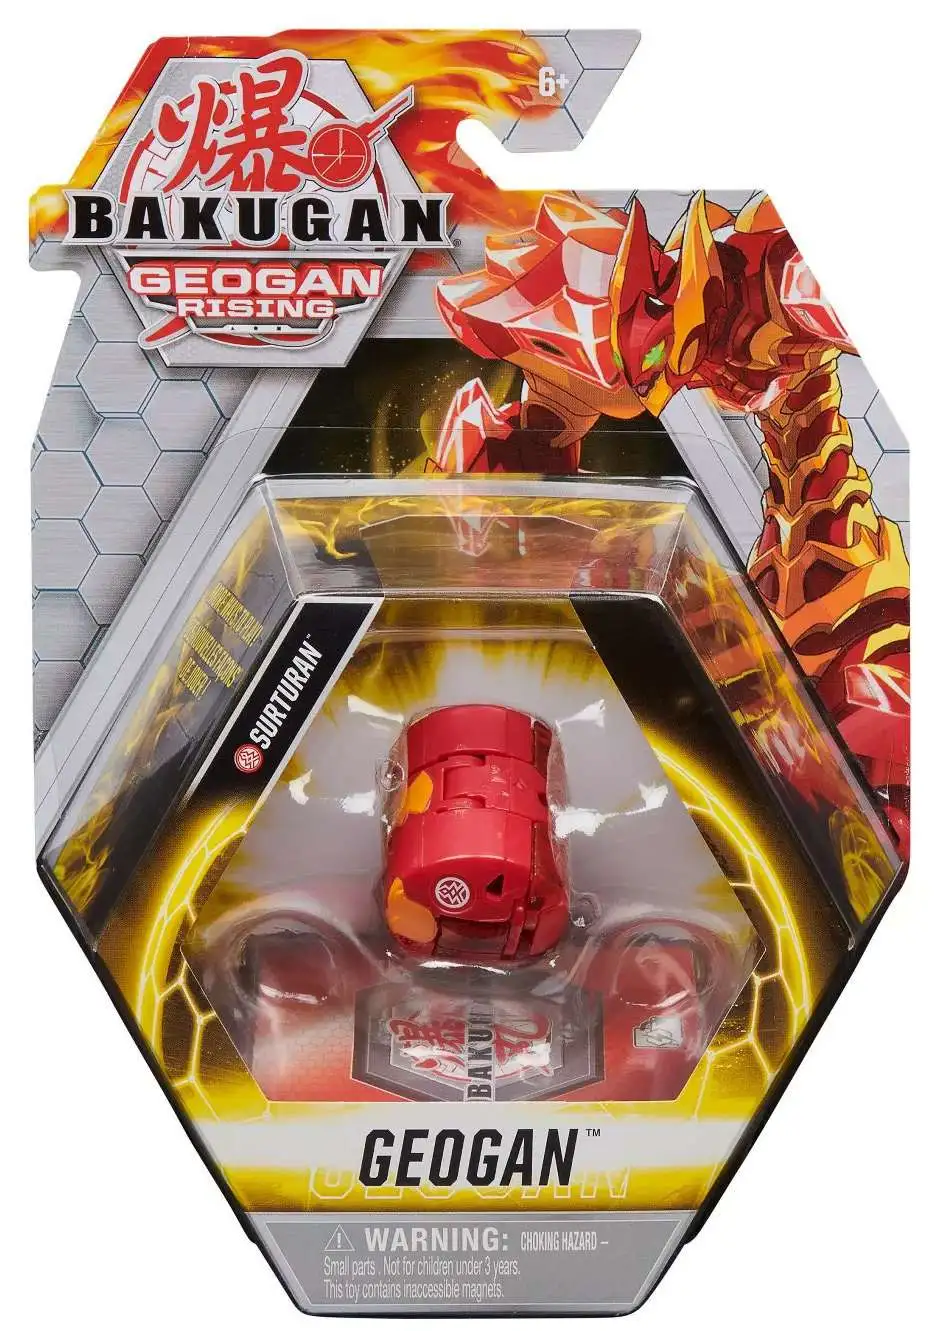 Bakugan Toy Battles! 🔥 Action-Packed Brawls with Bakugan Toys - Bakugan:  Geogan Rising 